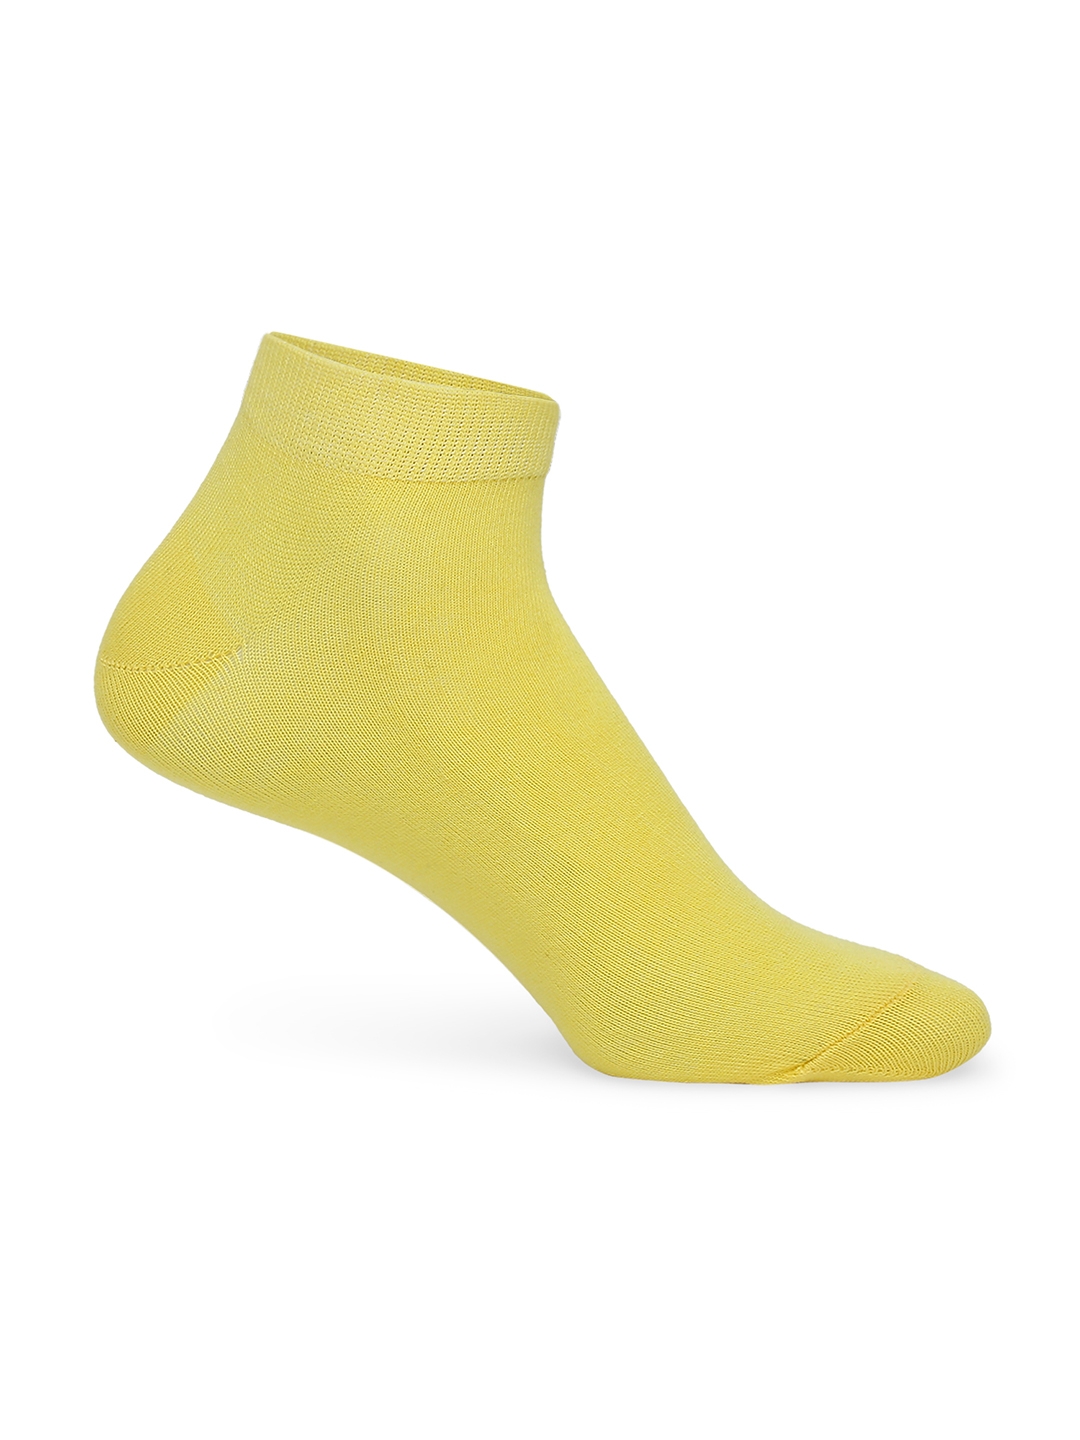 spykar | Underjeans By Spykar Men Olive & Yellow Cotton Blend Sneaker Socks - Pack Of 2 1